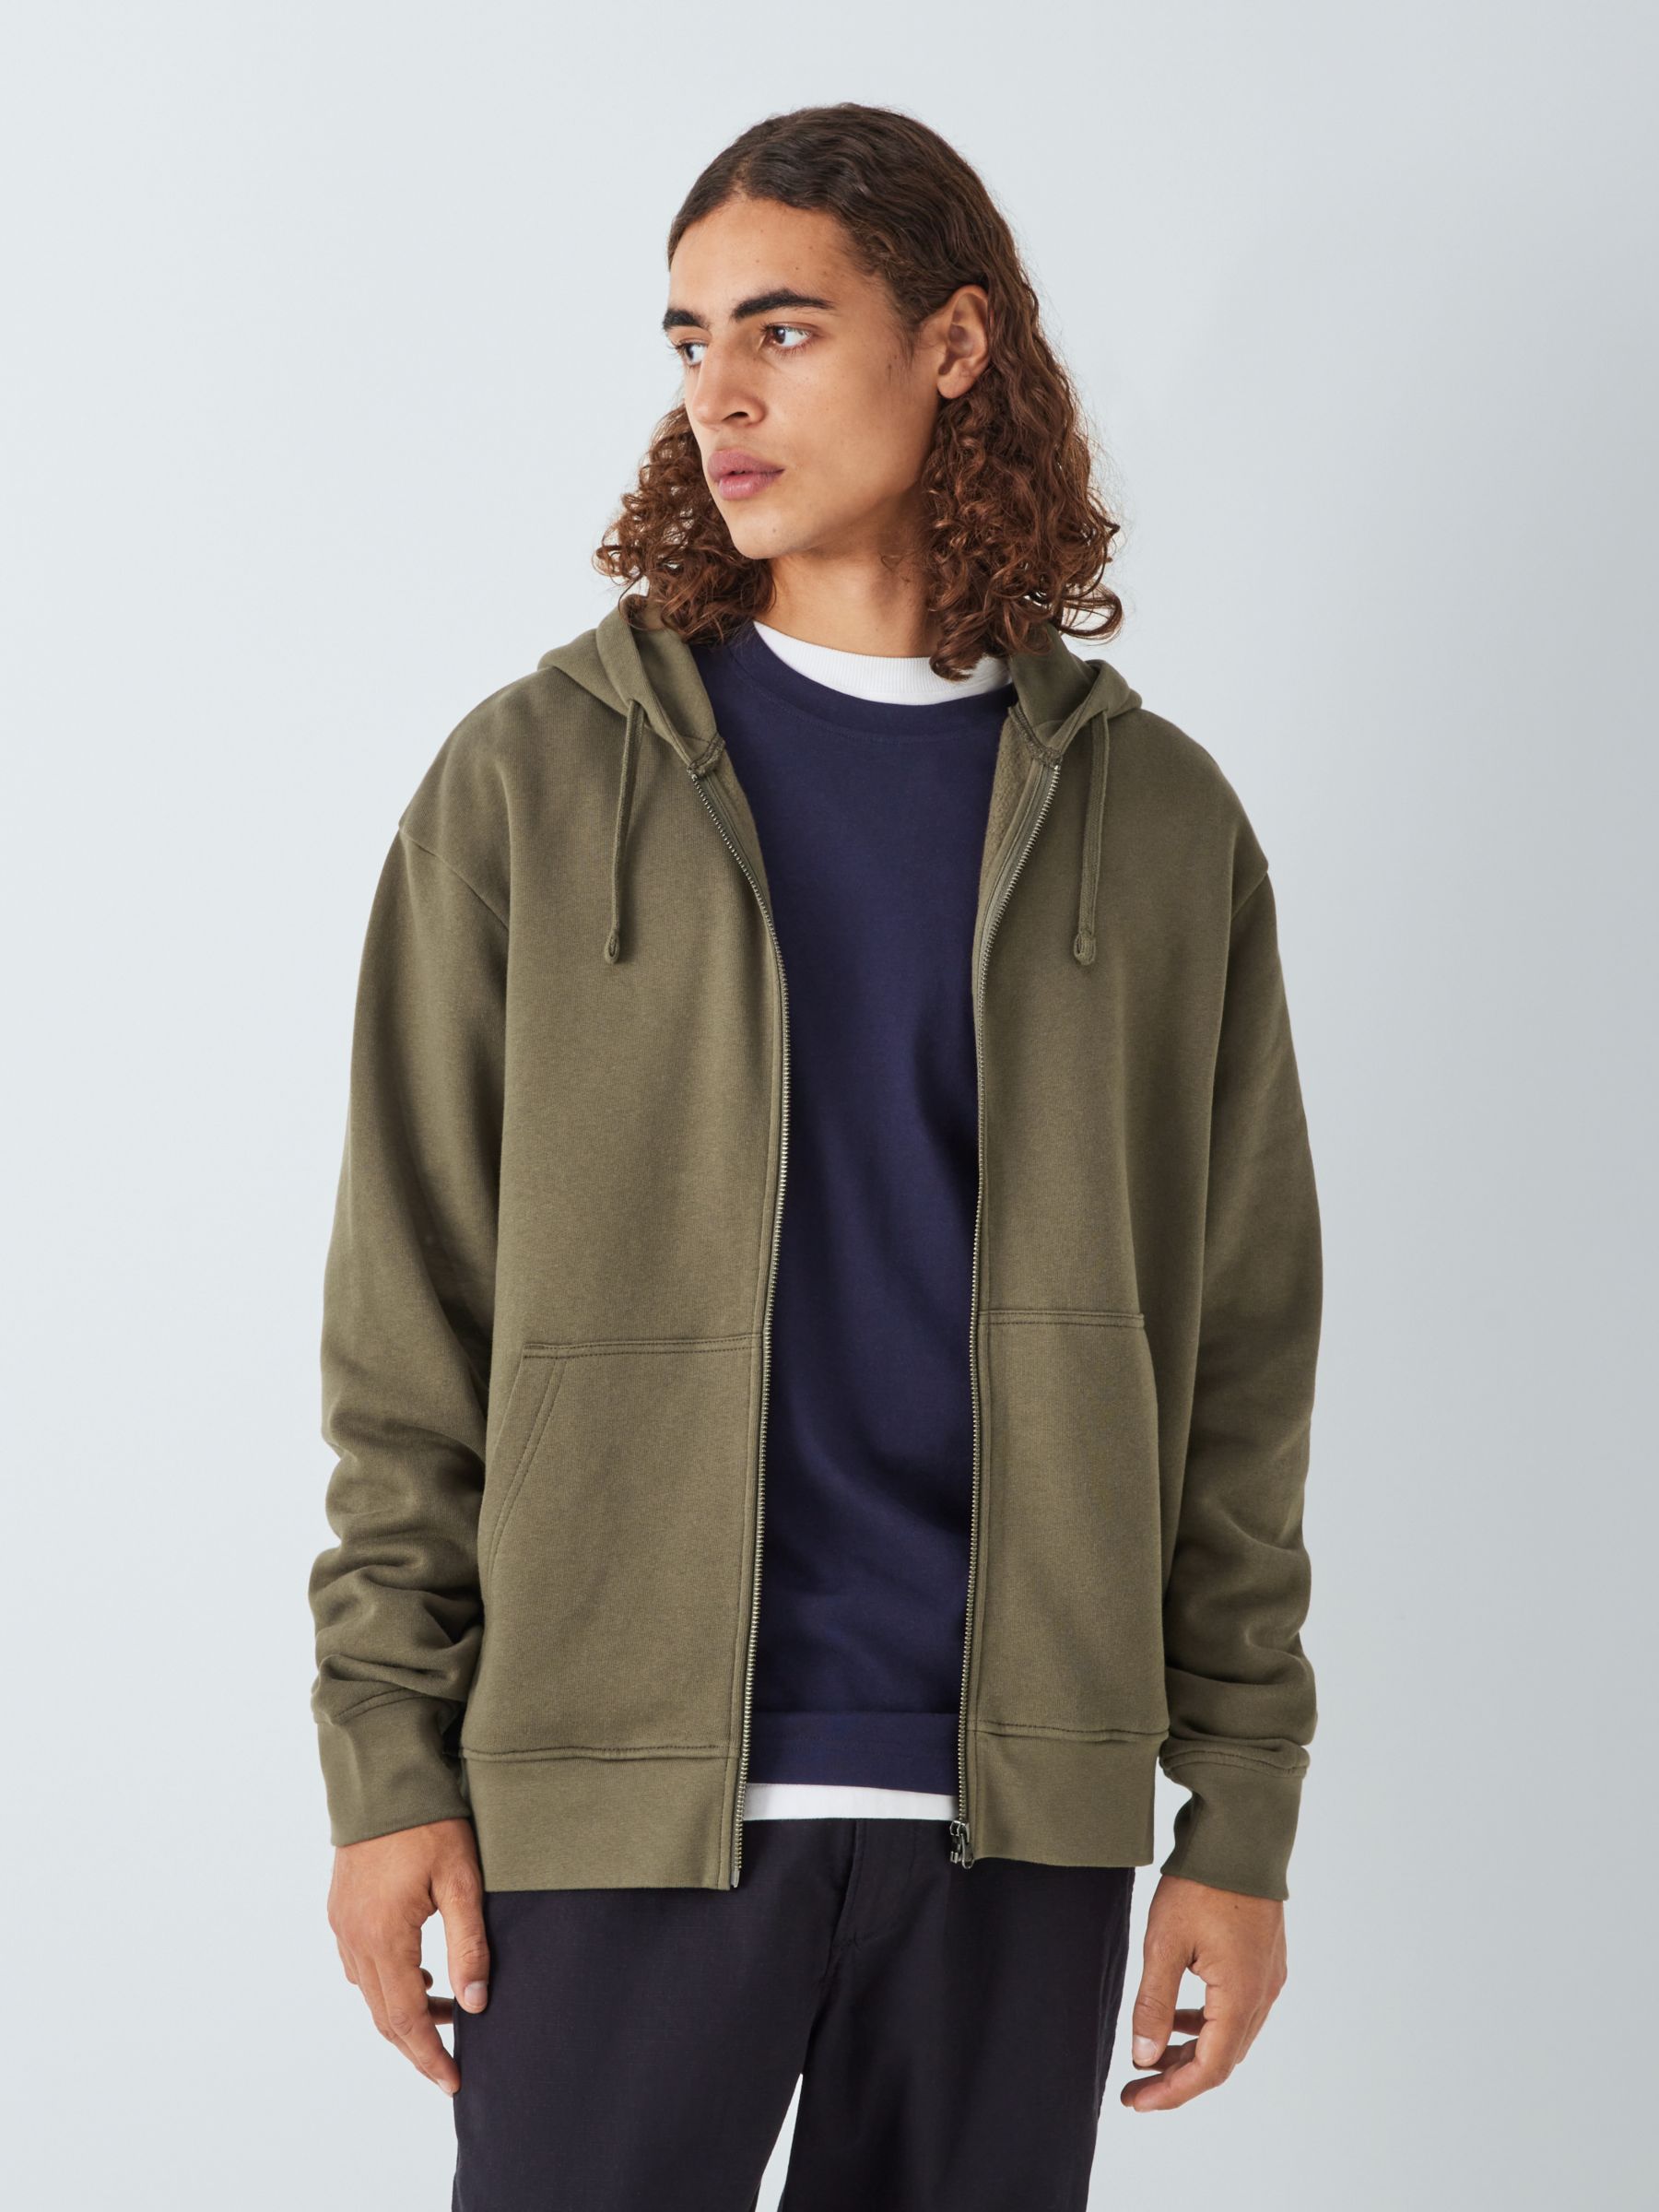 Hoodies John Lewis & | Men\'s & Partners - XL Green, Sweatshirts Size: